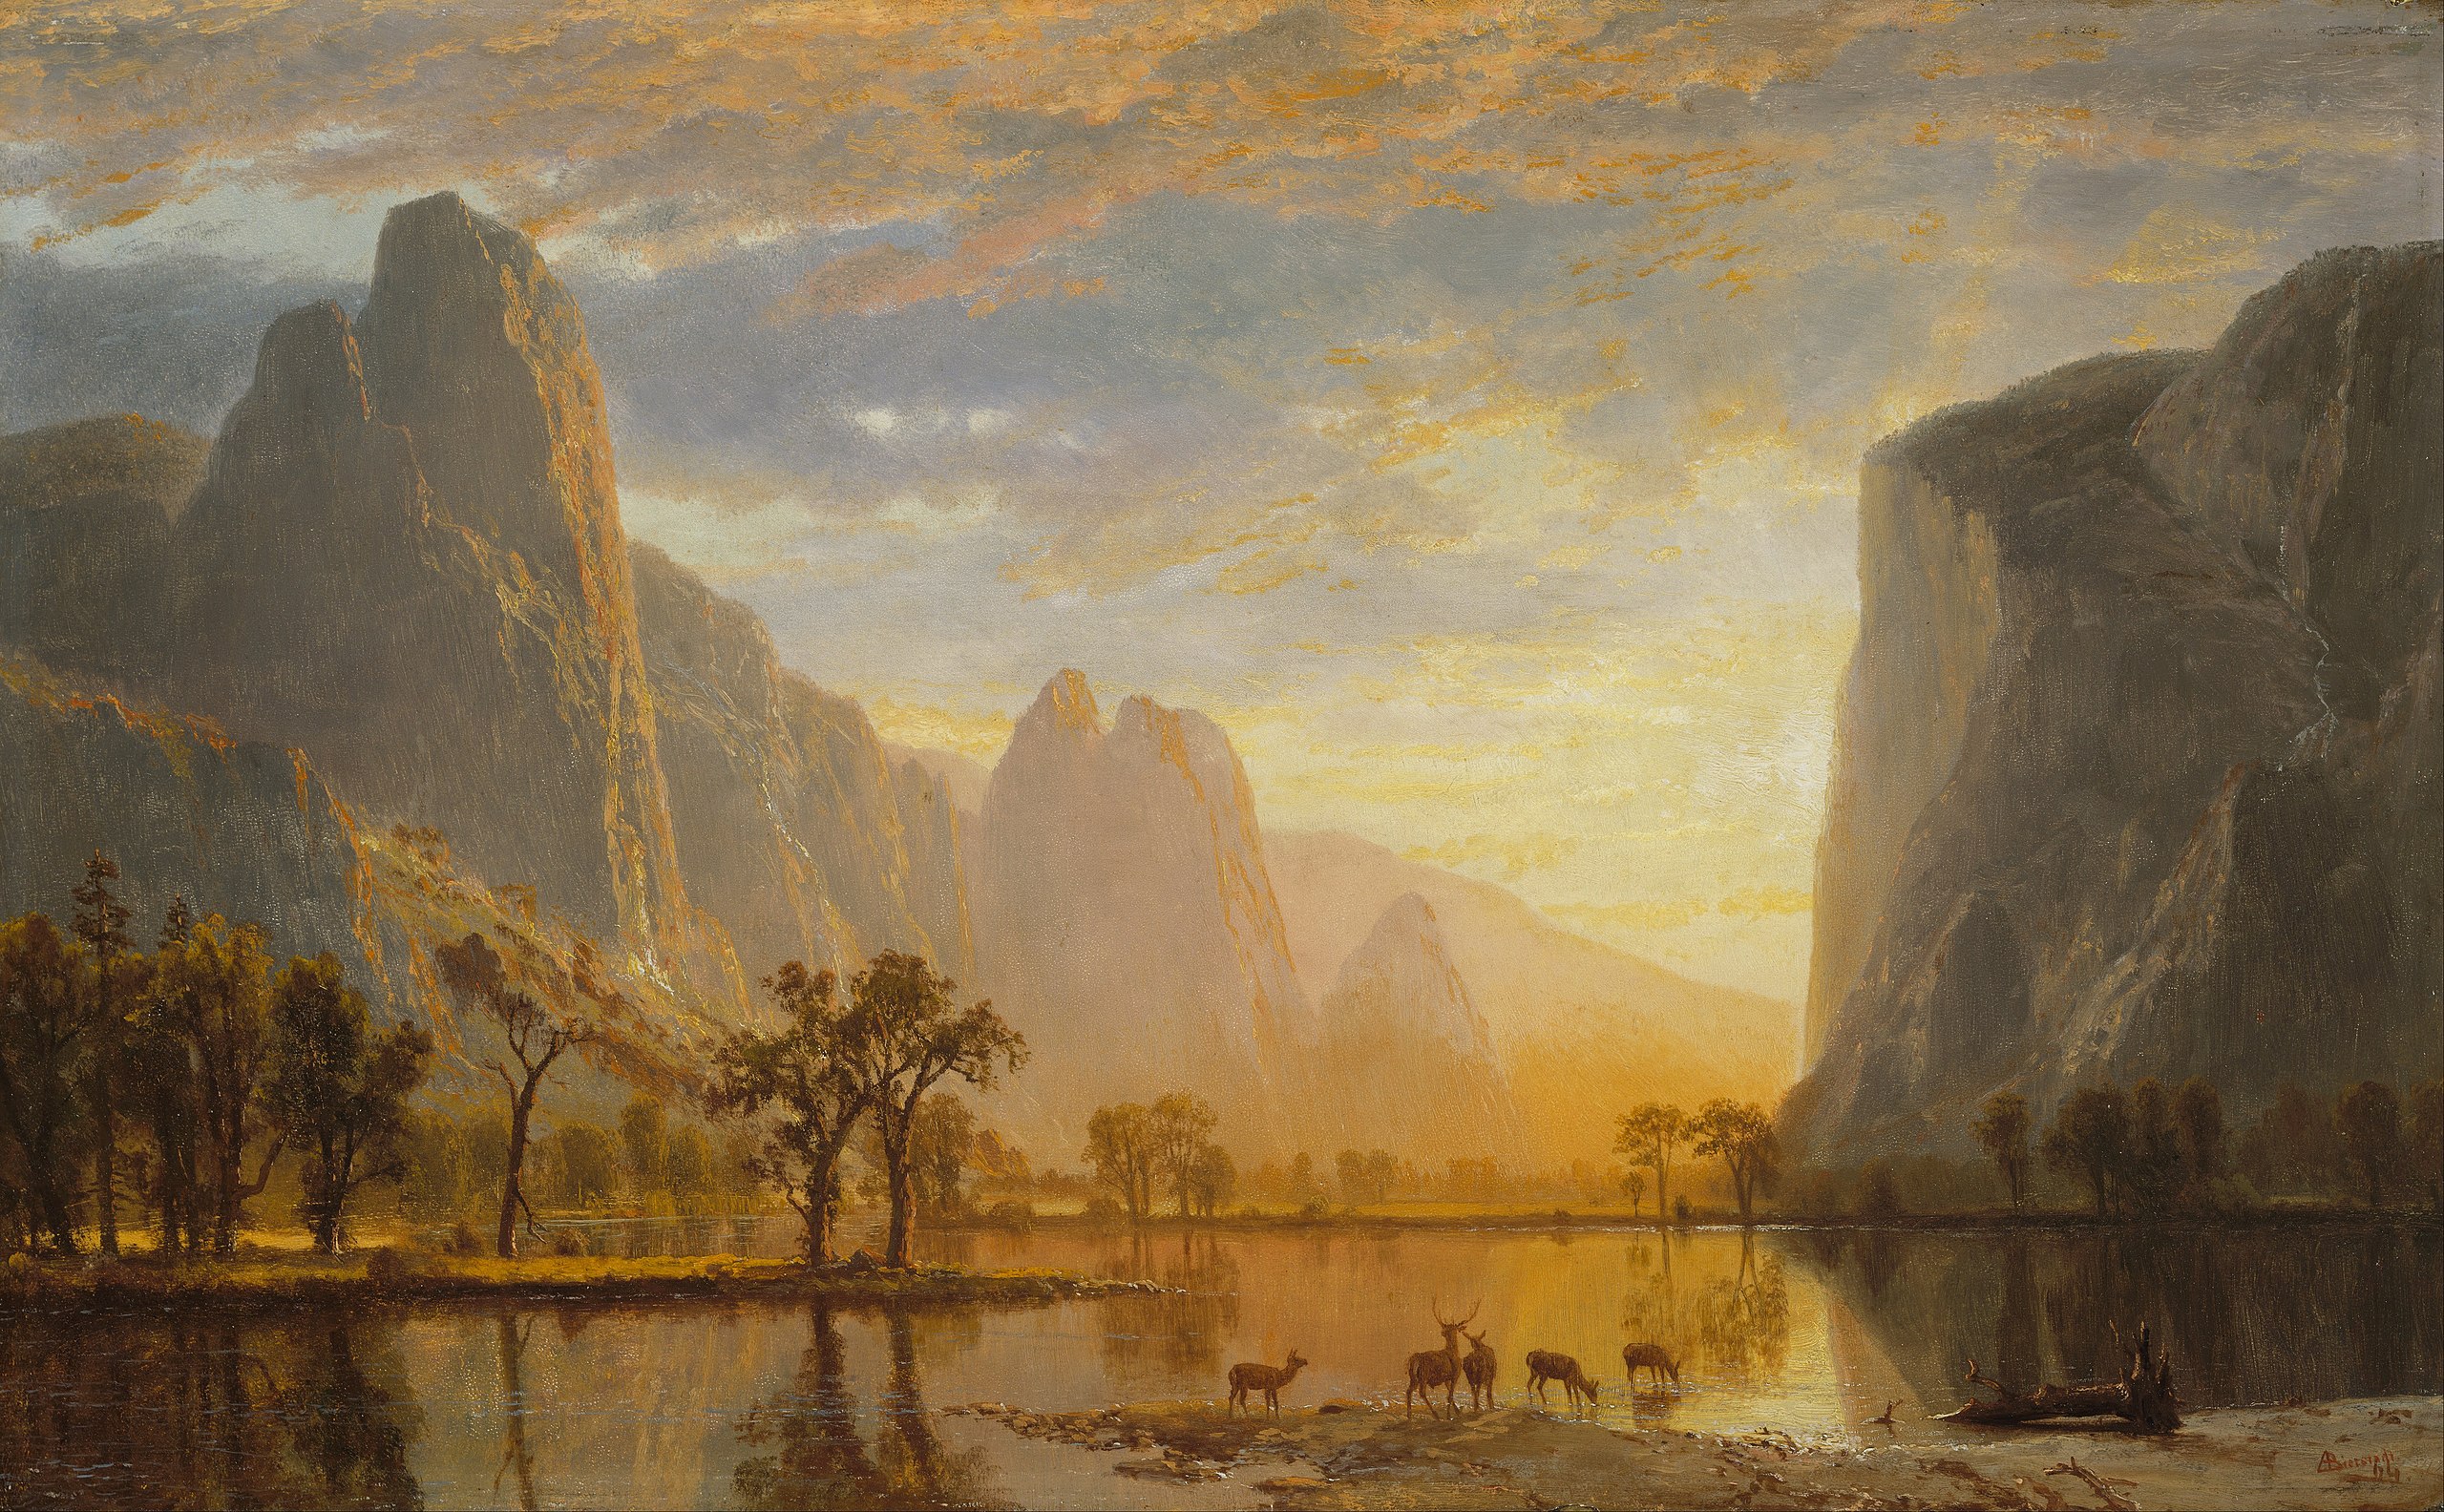 Valley of the Yosemite by Albert Bierstadt - 1864 - 30.16 x 48.89 cm Museum of Fine Arts Boston